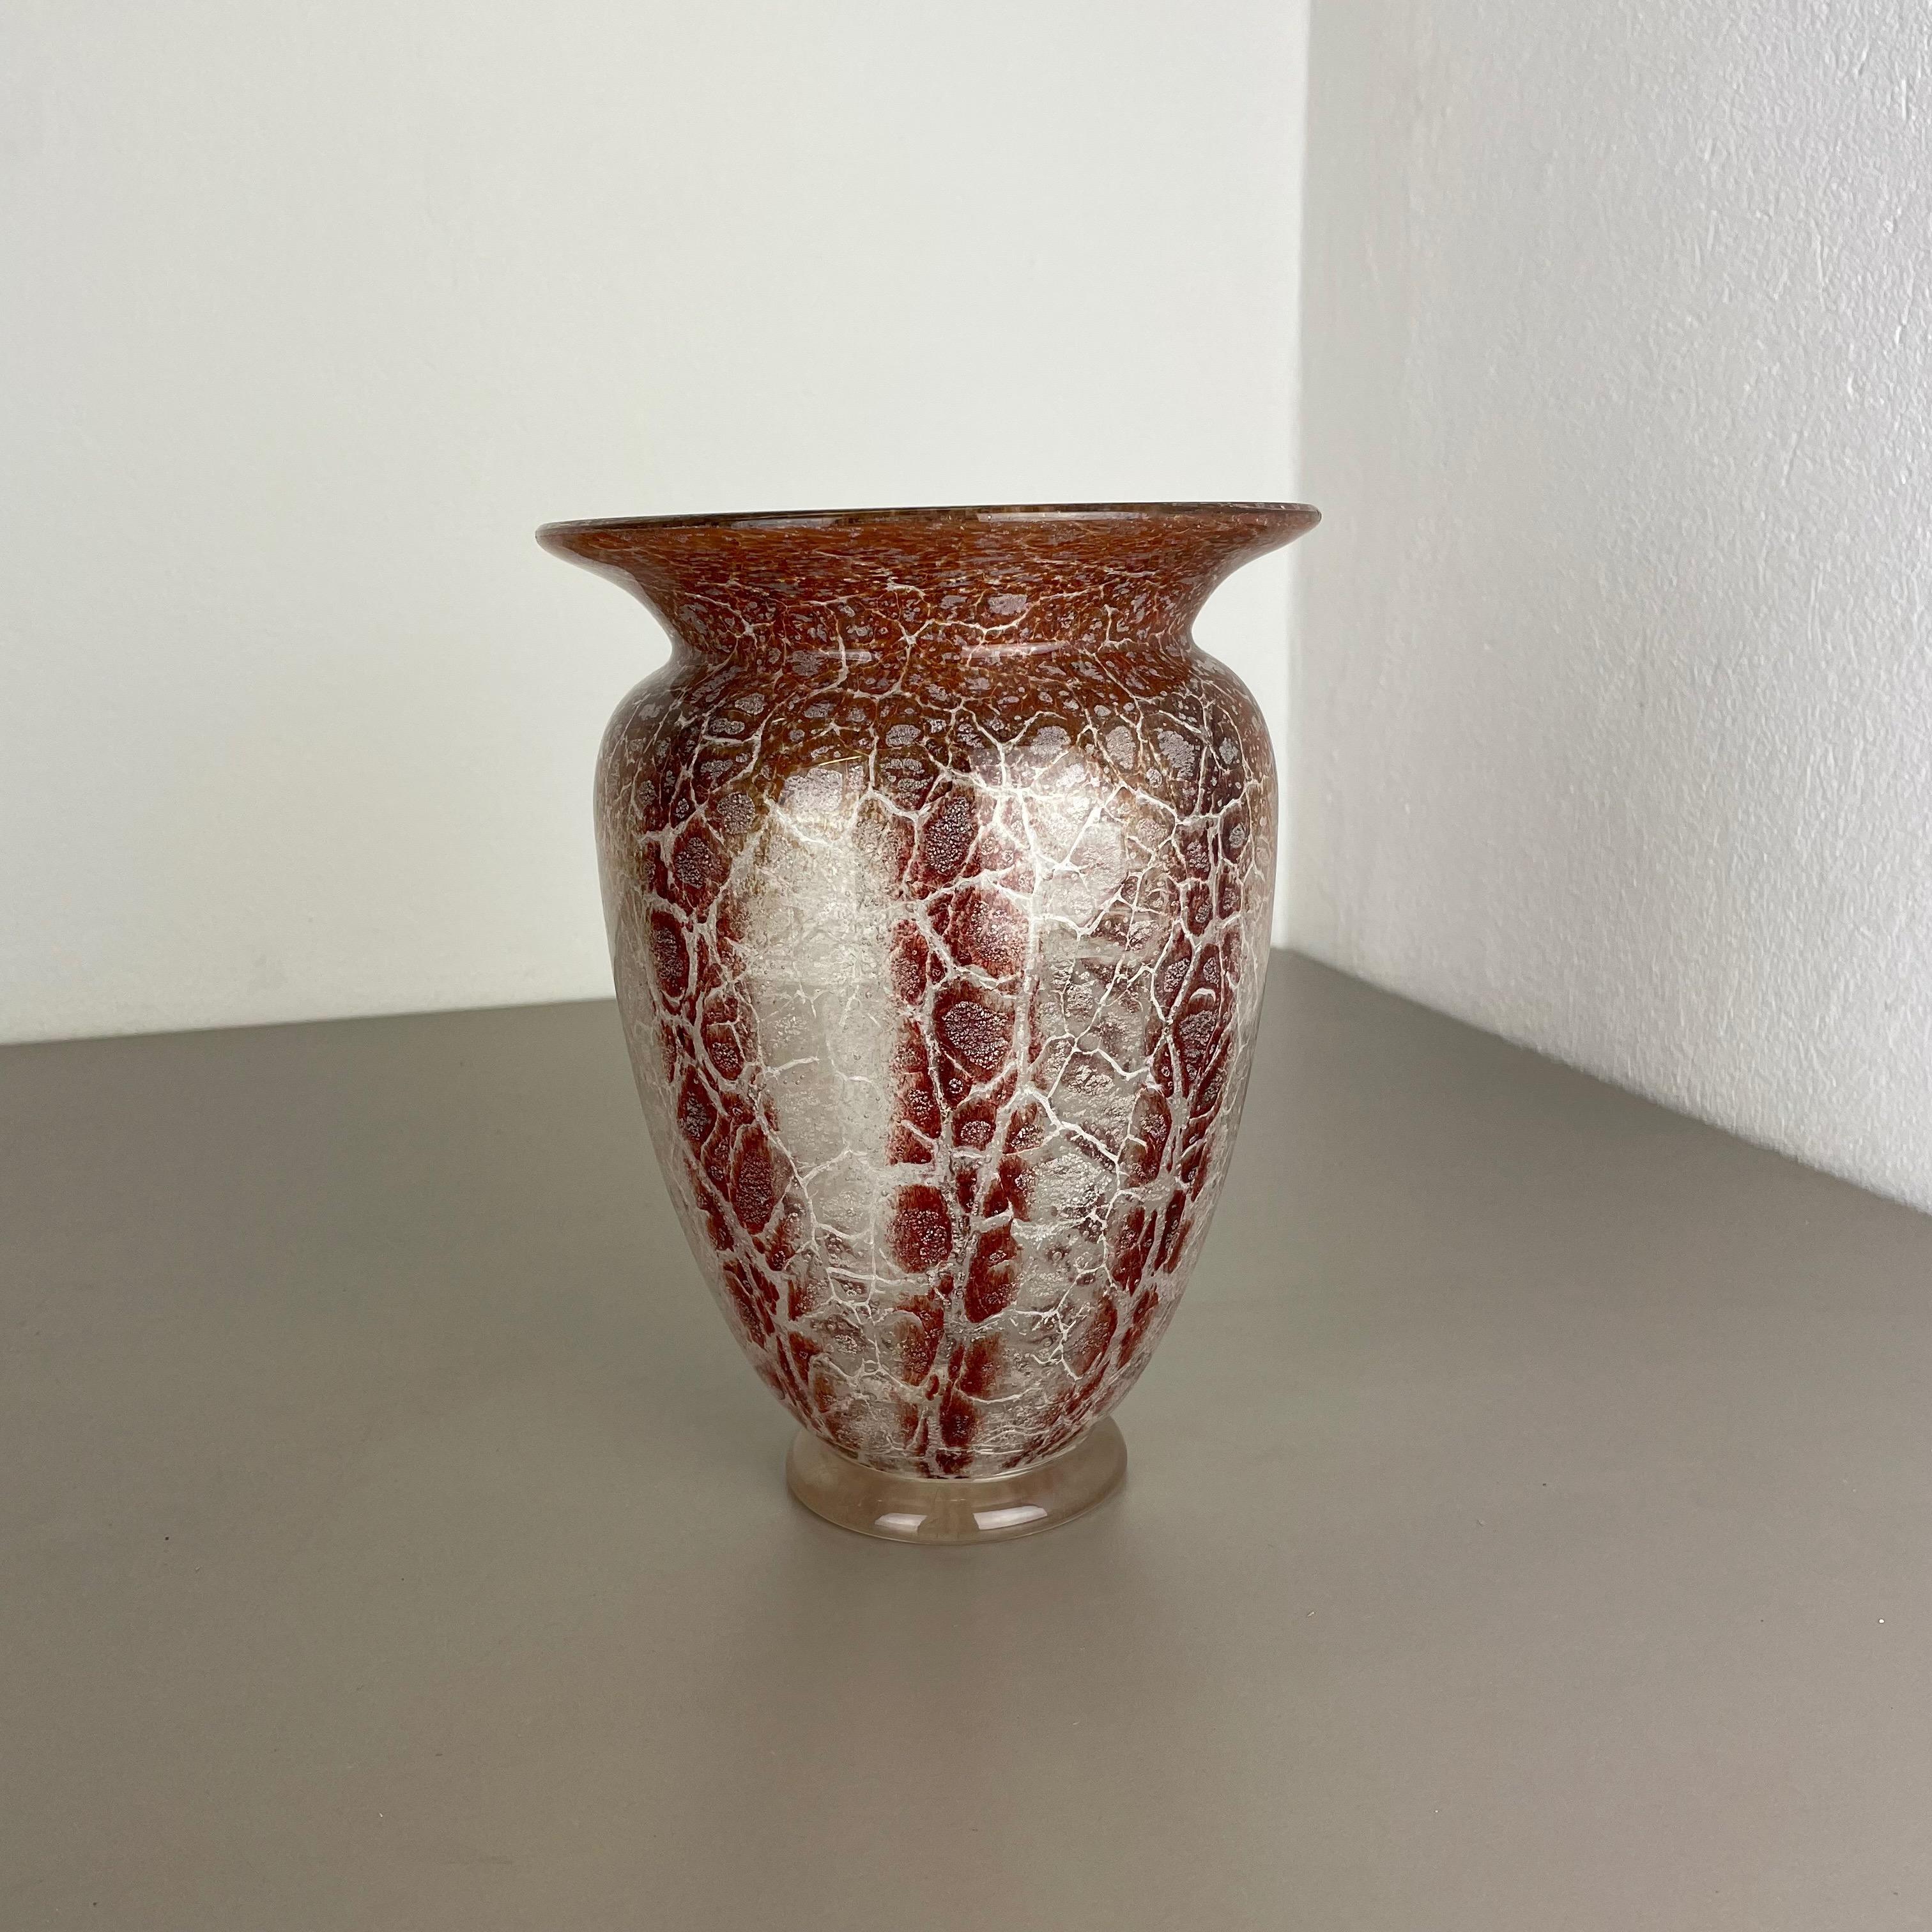 Article: Glass vase



Producer: WMF, Germany 



Designer: Karl Wiedmann 


Age: 1930s



Description: 

Wonderful heavy Art Deco glass element designed by Karl Wiedmann and produced WMF, Germany in the 1930s. This glass bowl is